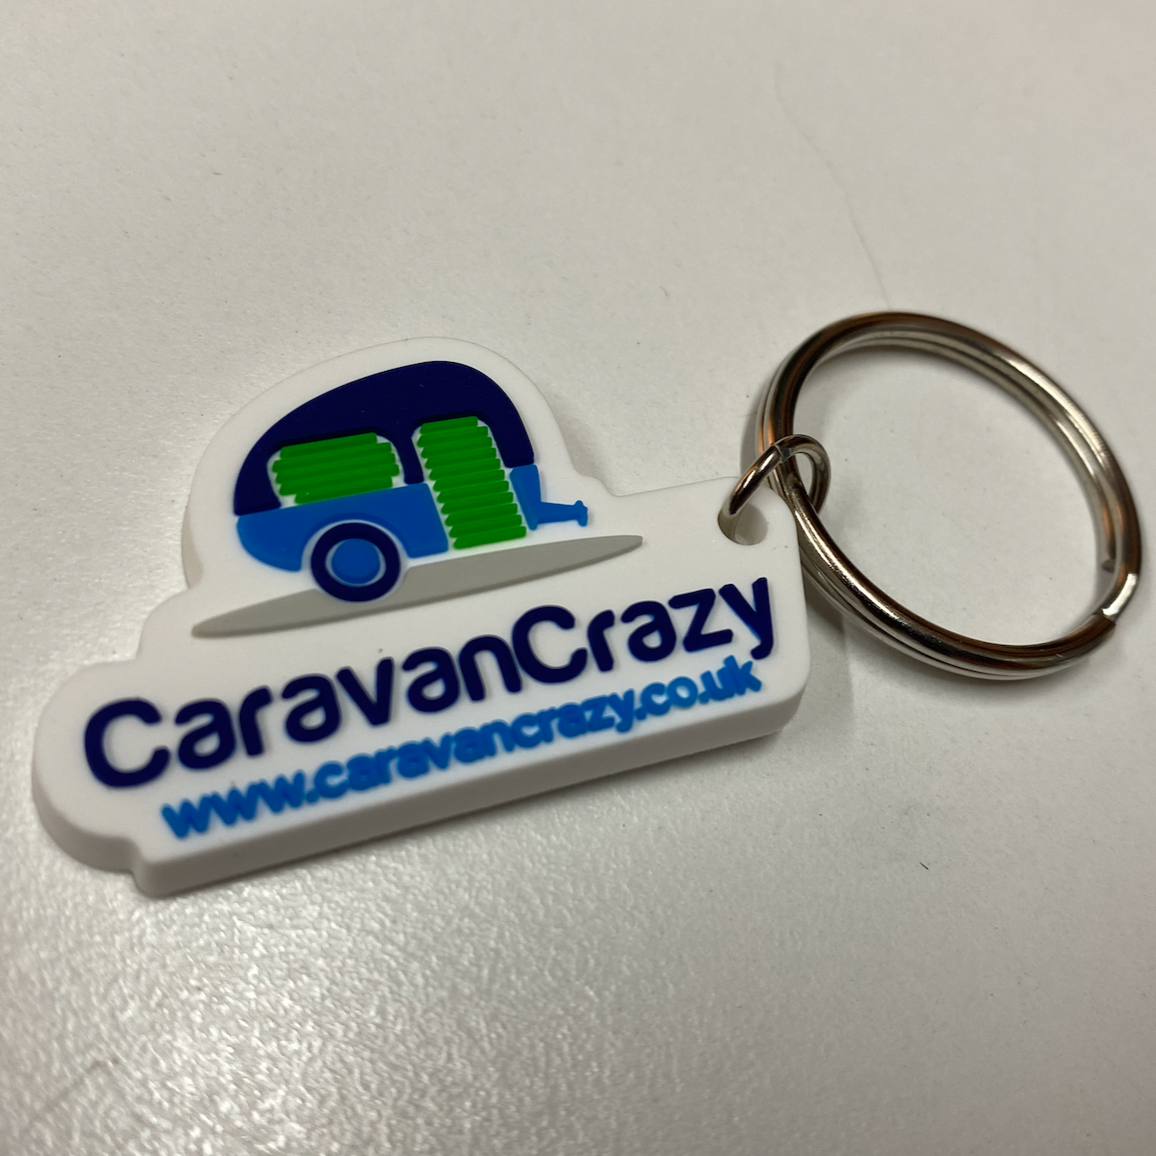 Caravan Crazy Keyring